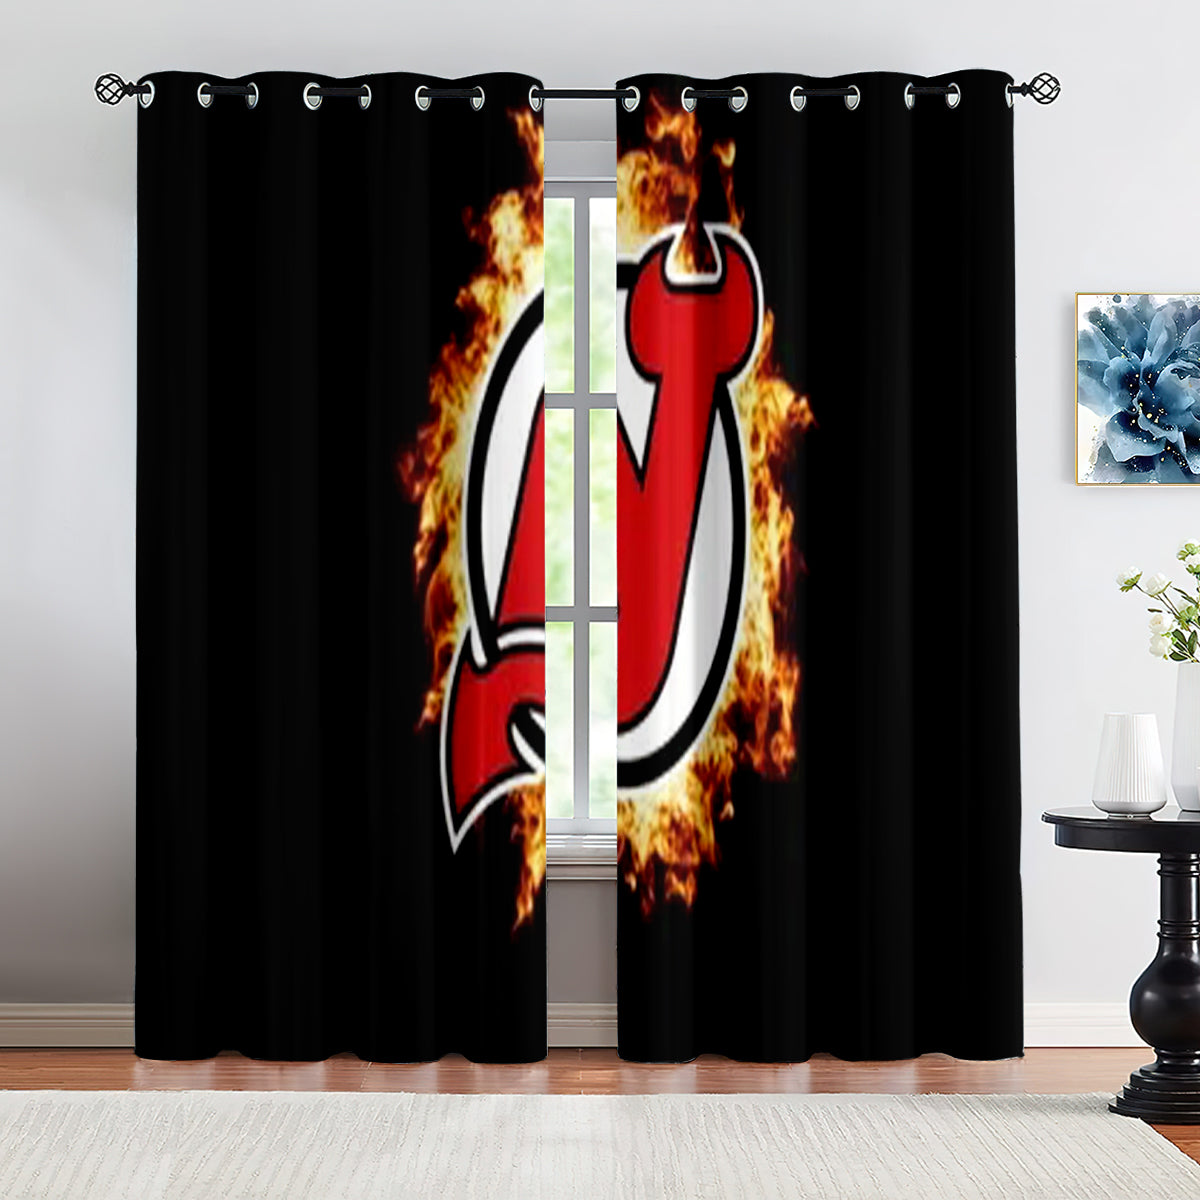 New Jersey Devils Hockey League Blackout Curtains Drapes For Window Treatment Set